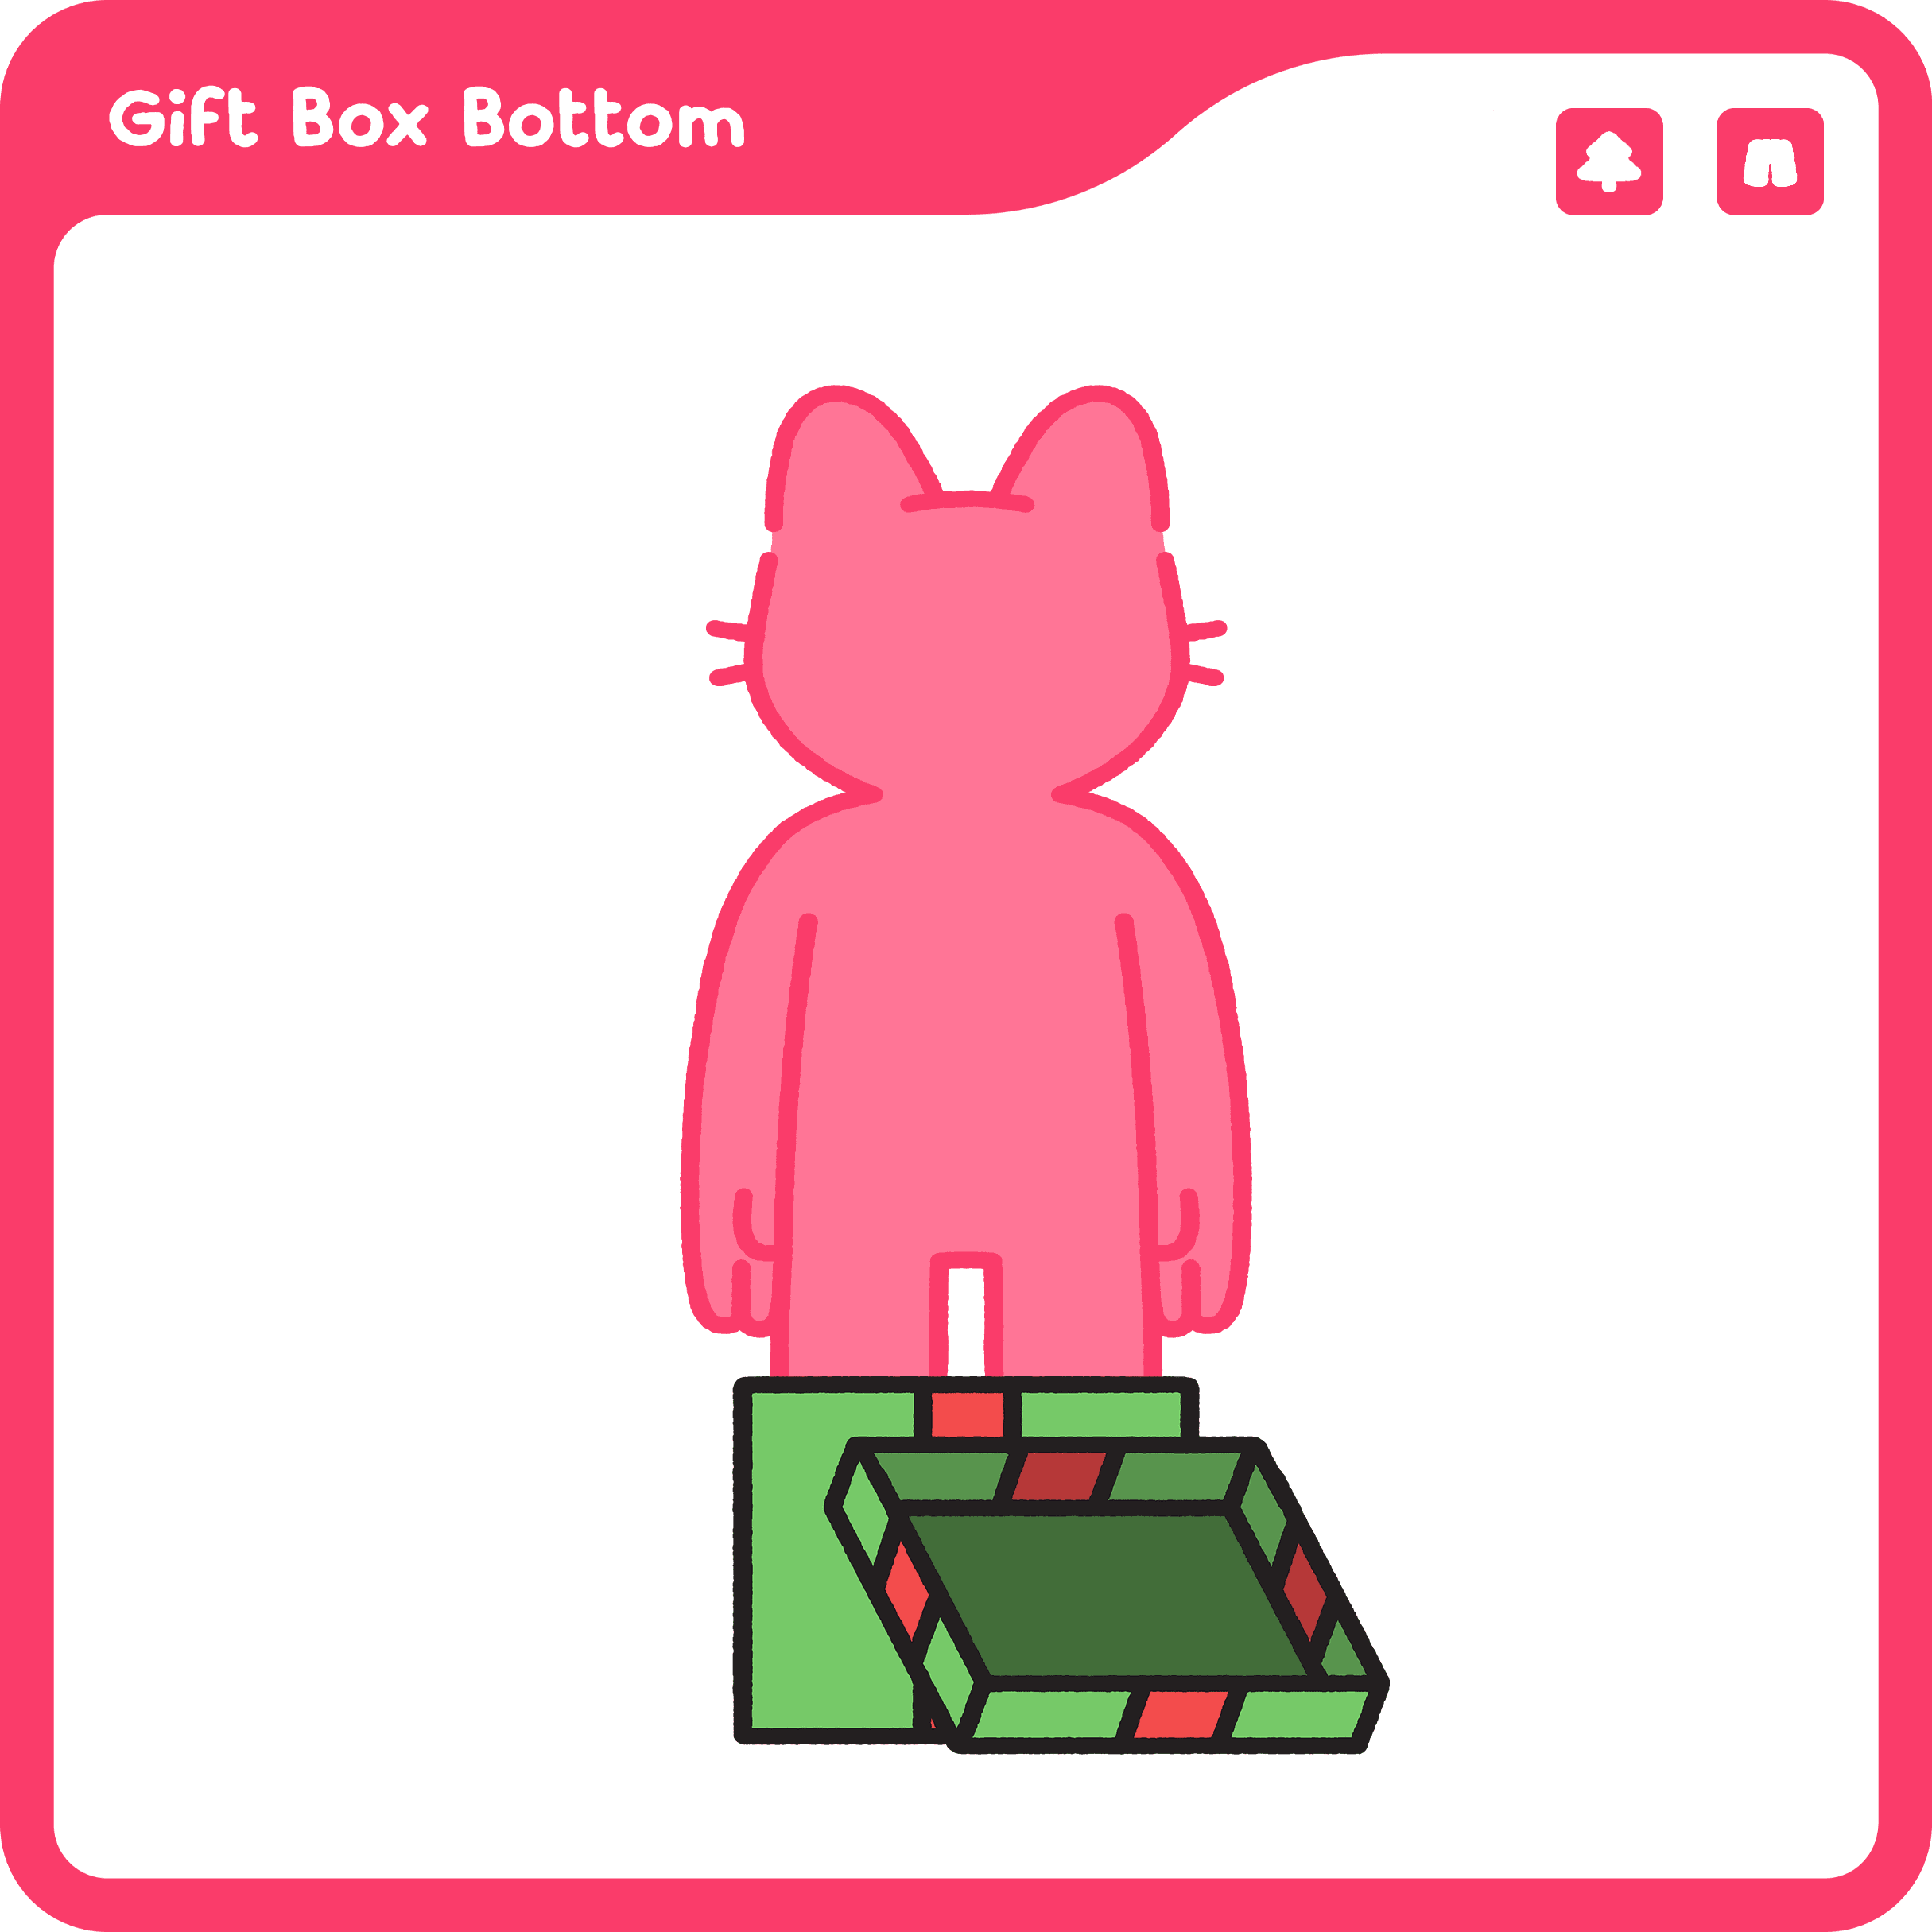 Gift Box Bottom